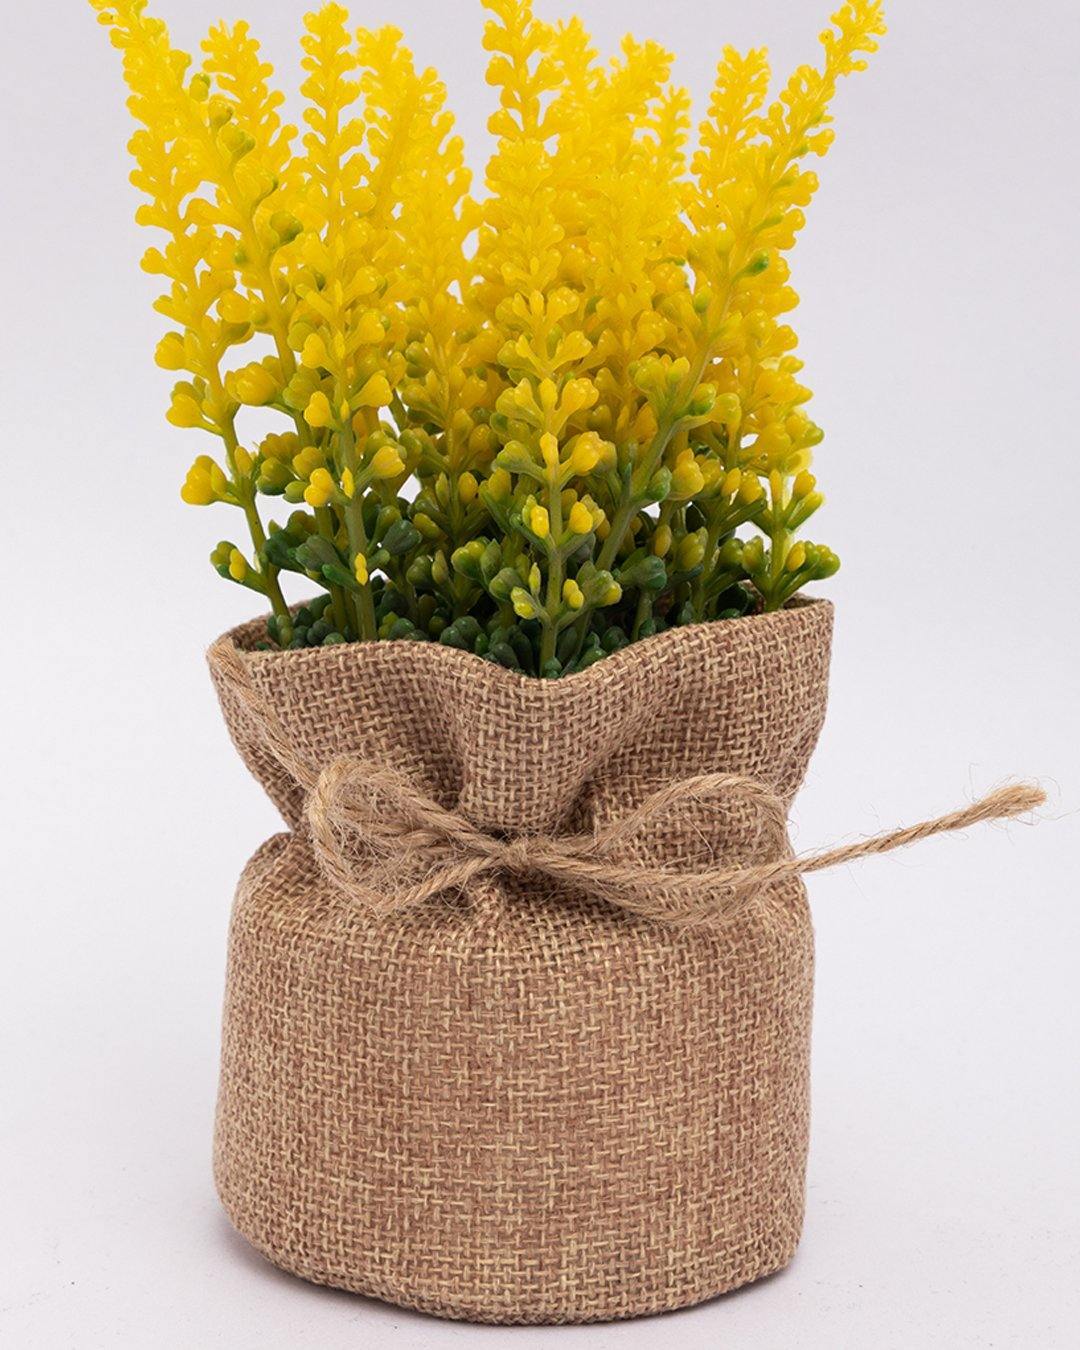 VON CASA Artificial Flower with Pot, Yellow, Plastic